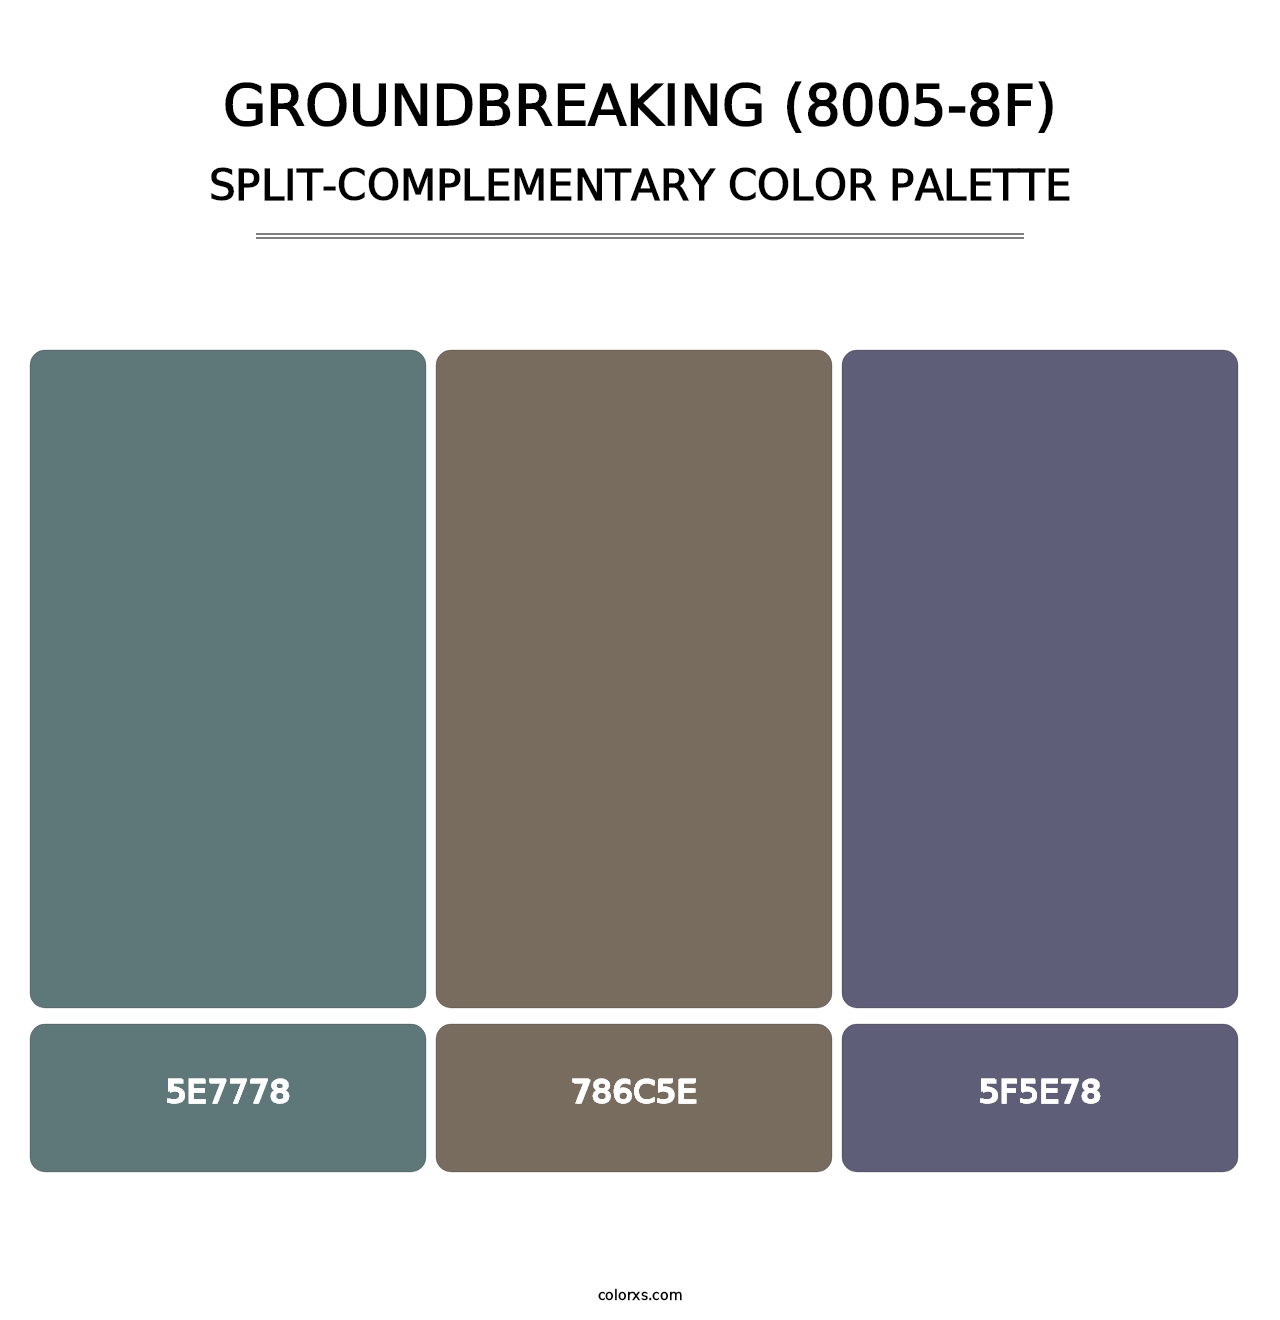 Groundbreaking (8005-8F) - Split-Complementary Color Palette